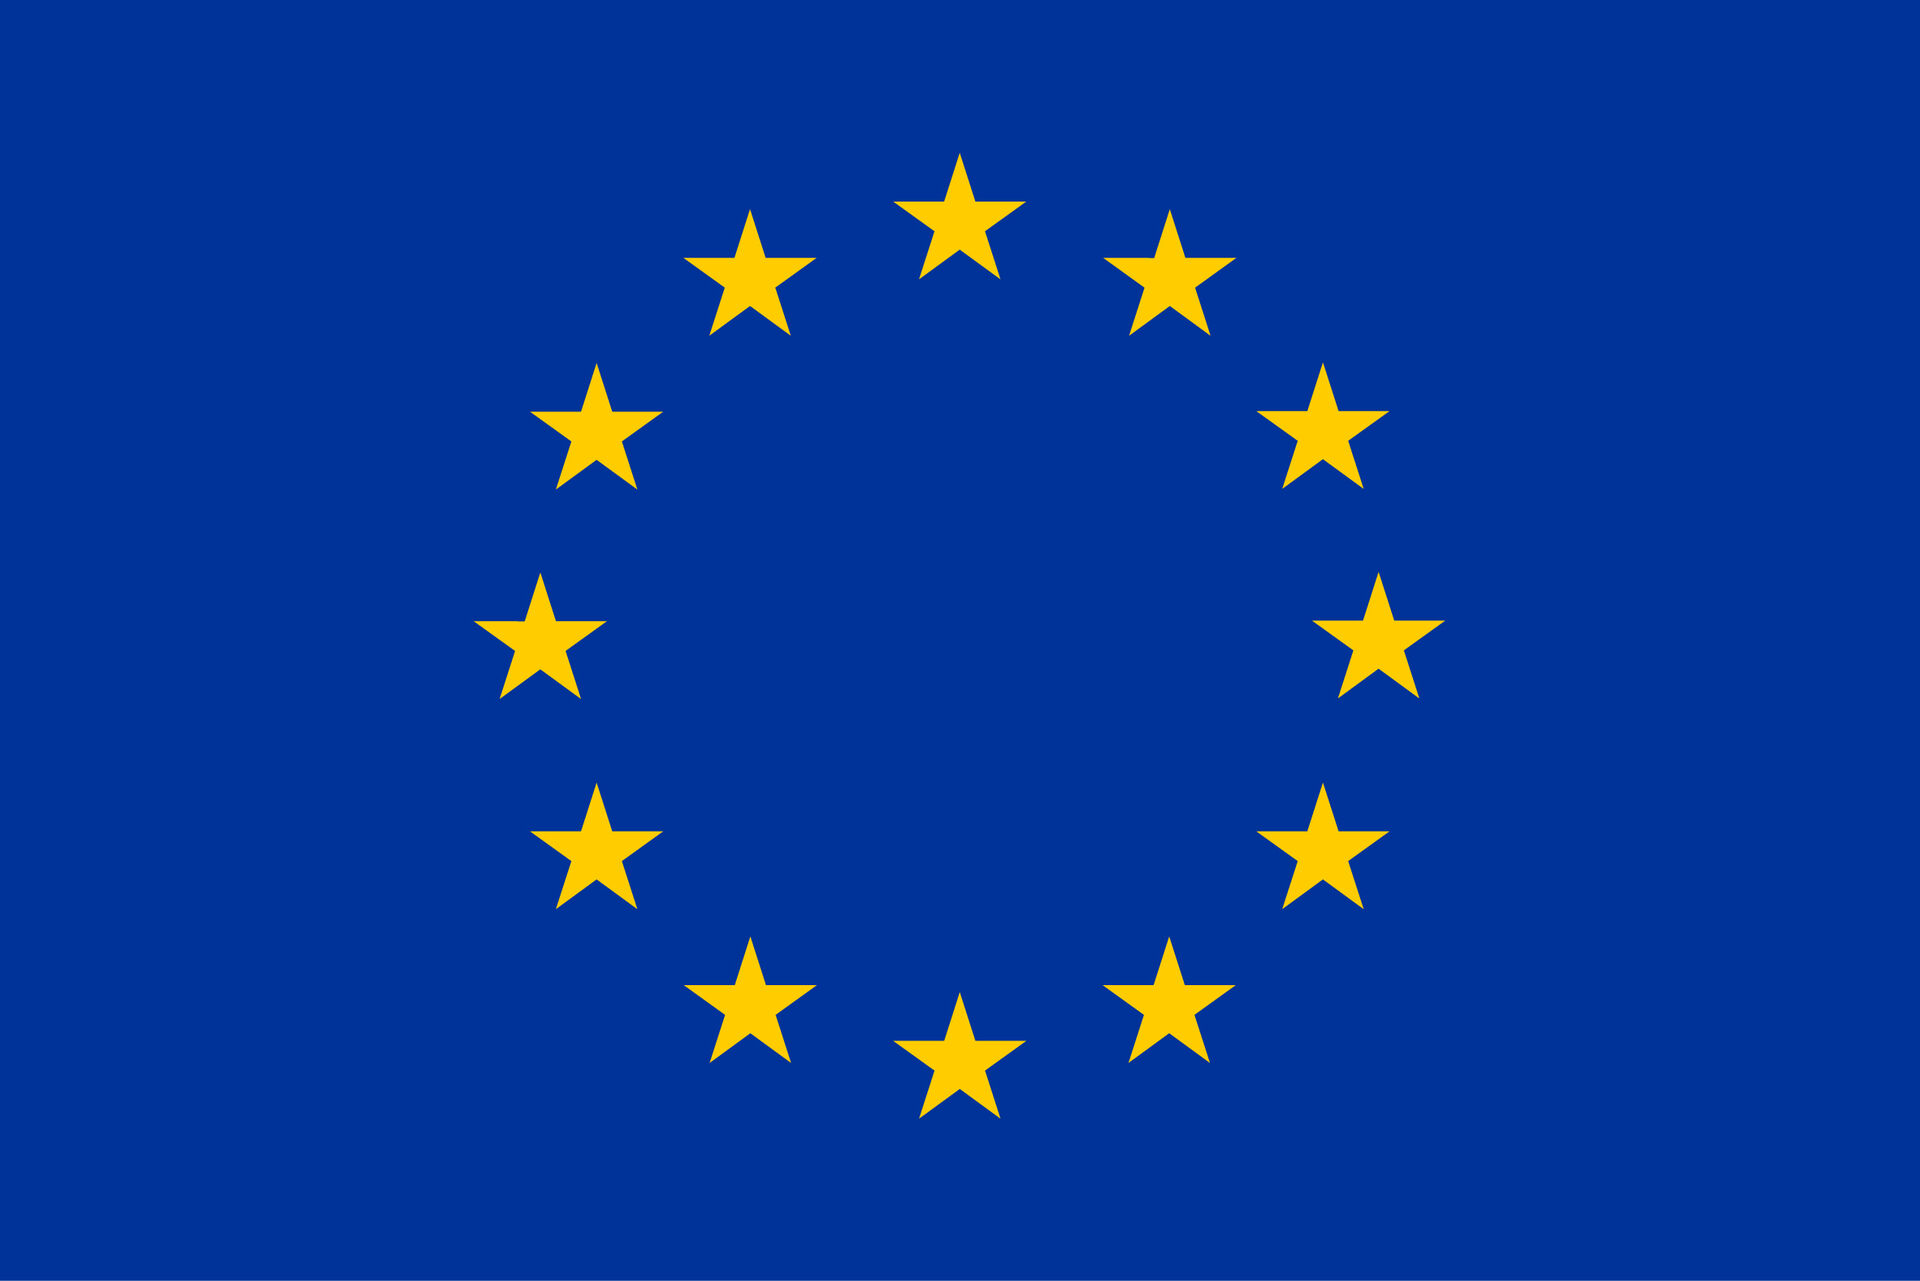 EU flag - blue background, 12 golden stars is a circle